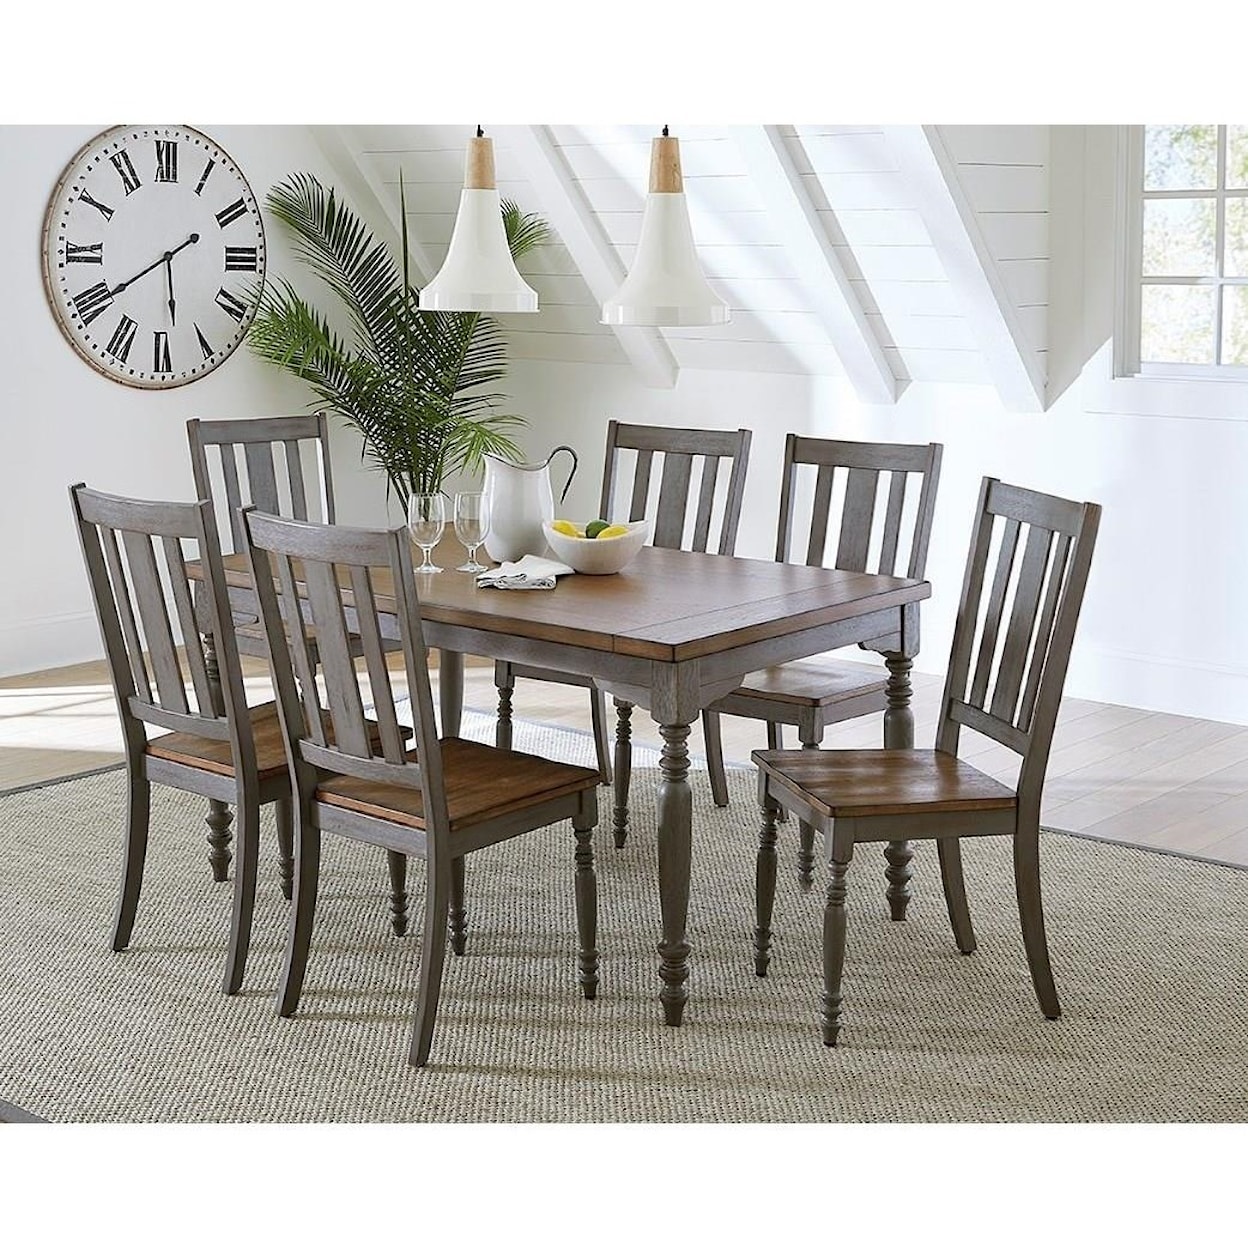 Progressive Furniture Midori Dining Chair